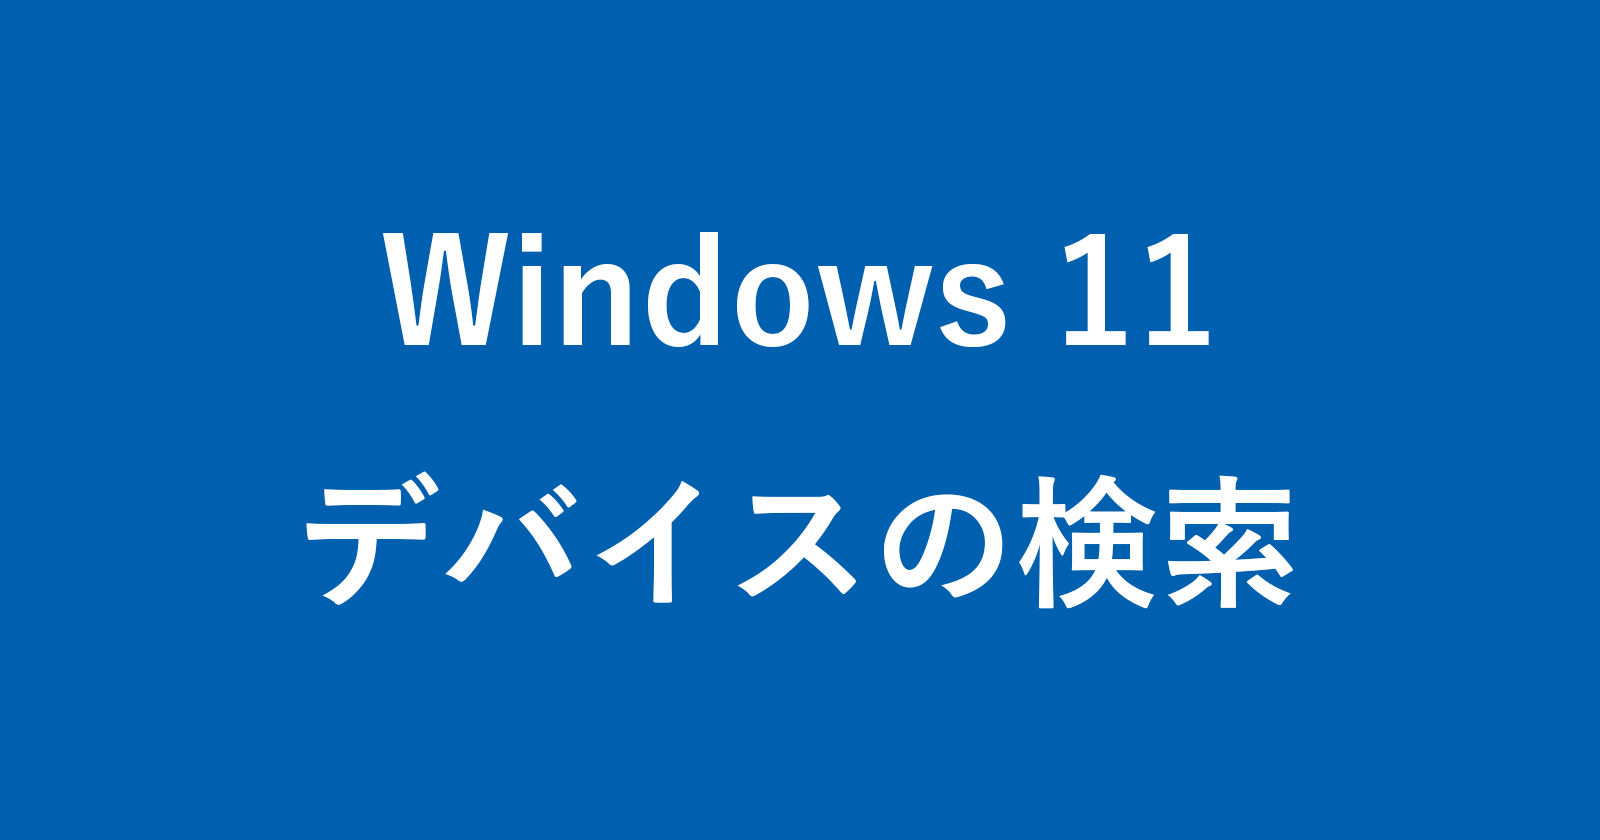 windows 11 device search